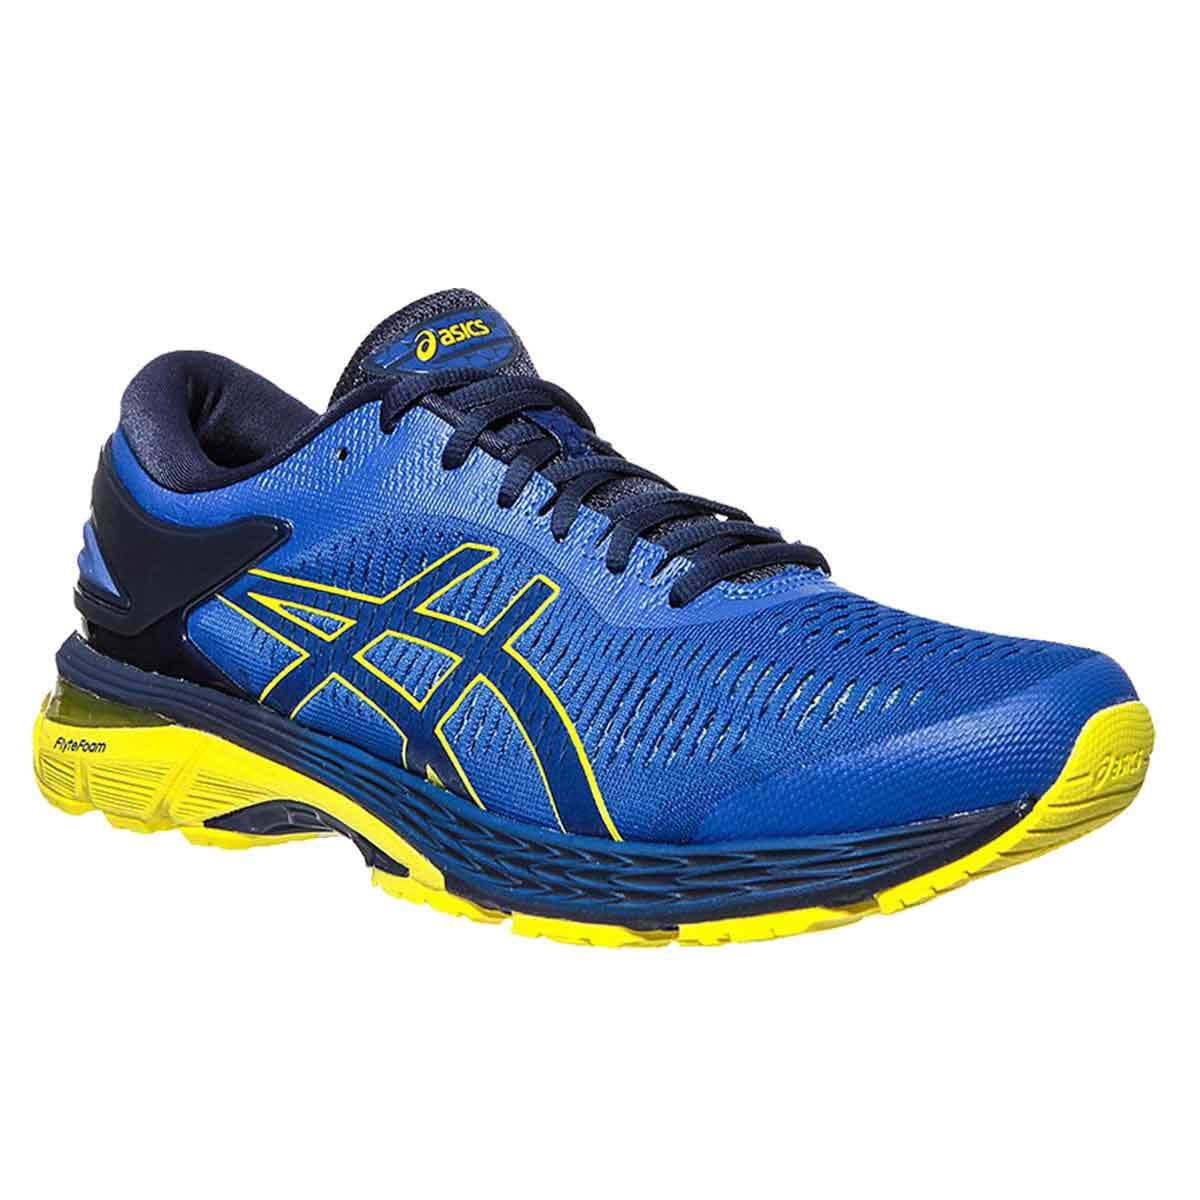 Buy Asics Gel Kayano 25 Running Shoes (Blue/Lemon) Online India